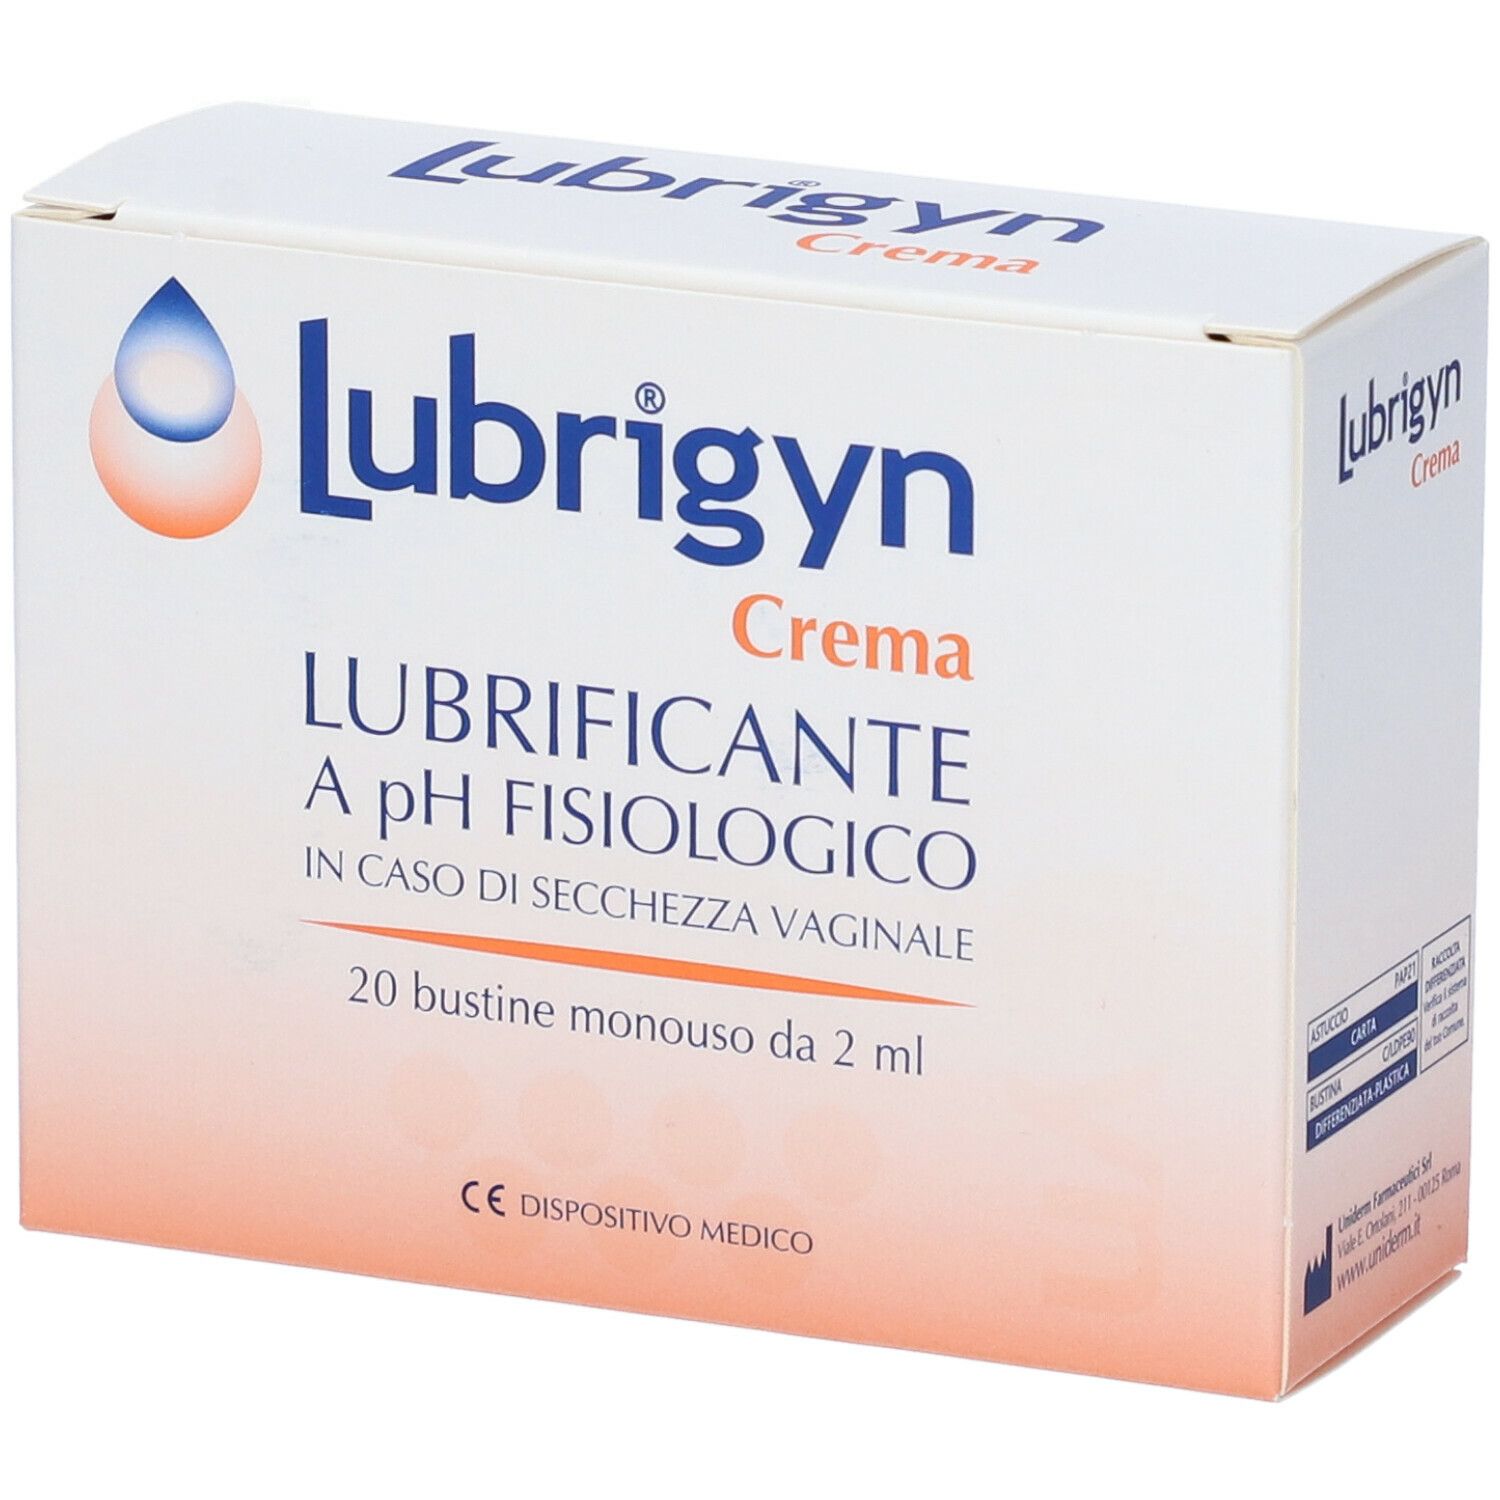 Lubrigyn® Crema vaginale